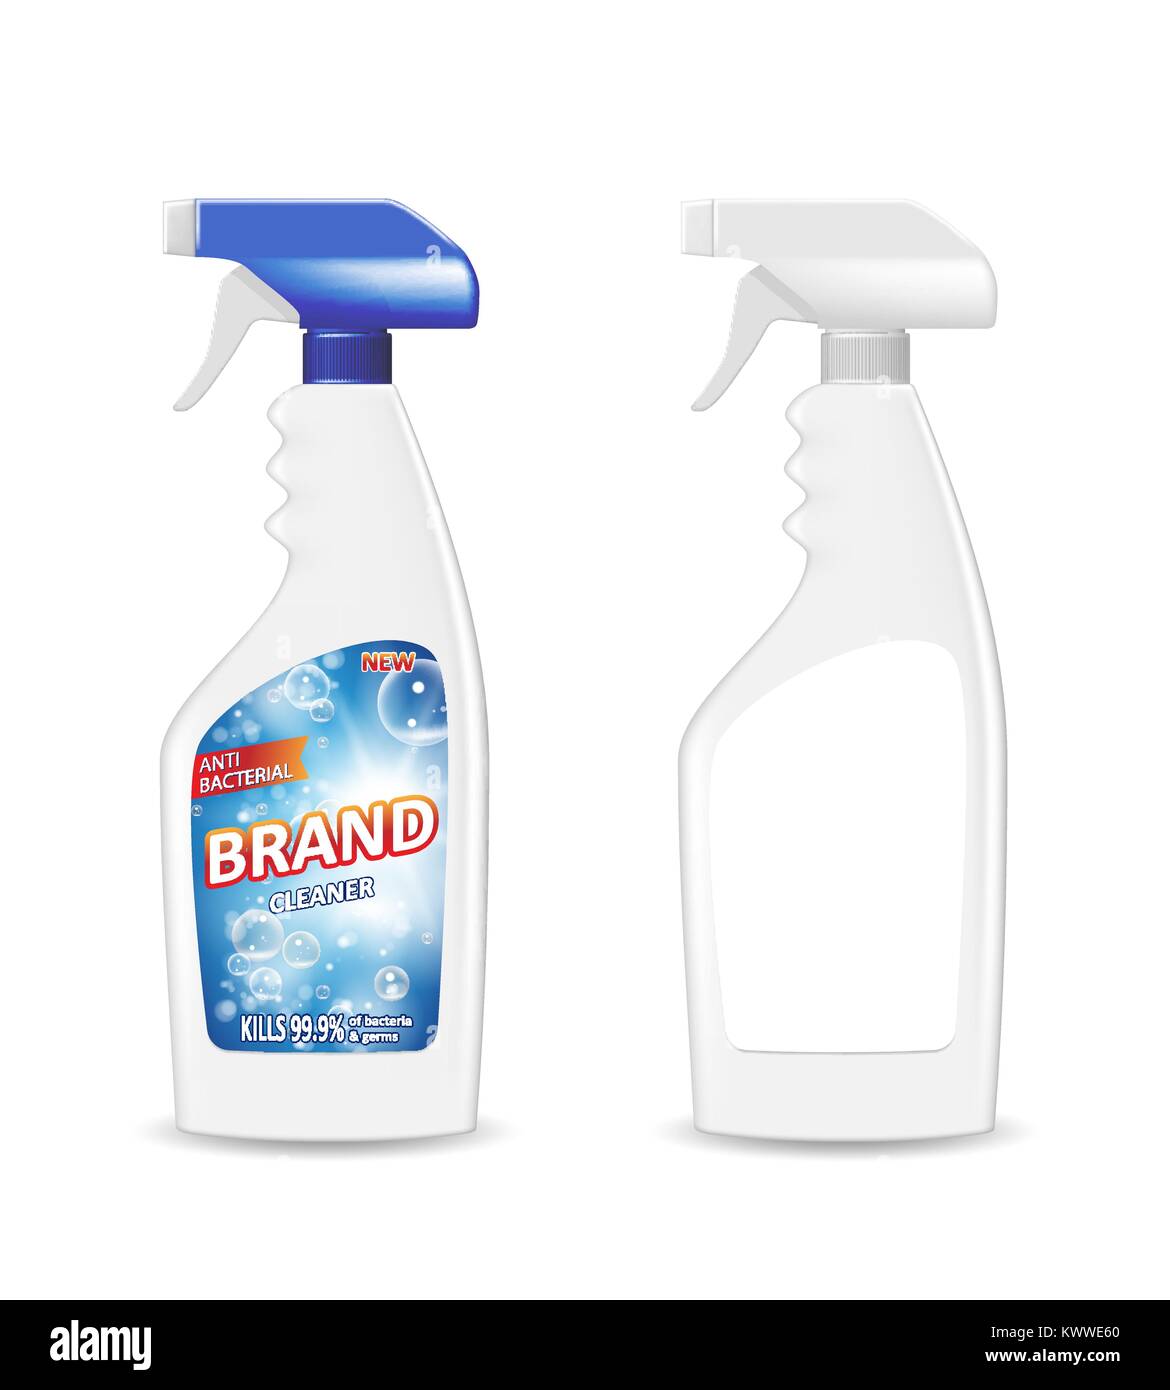 Spray Pistol Cleaner Plastic Bottle with detergent for bathroom. Bathroom cleaner ad. Spray Bottle mockup. Realistic 3d illustration. Stock Vector